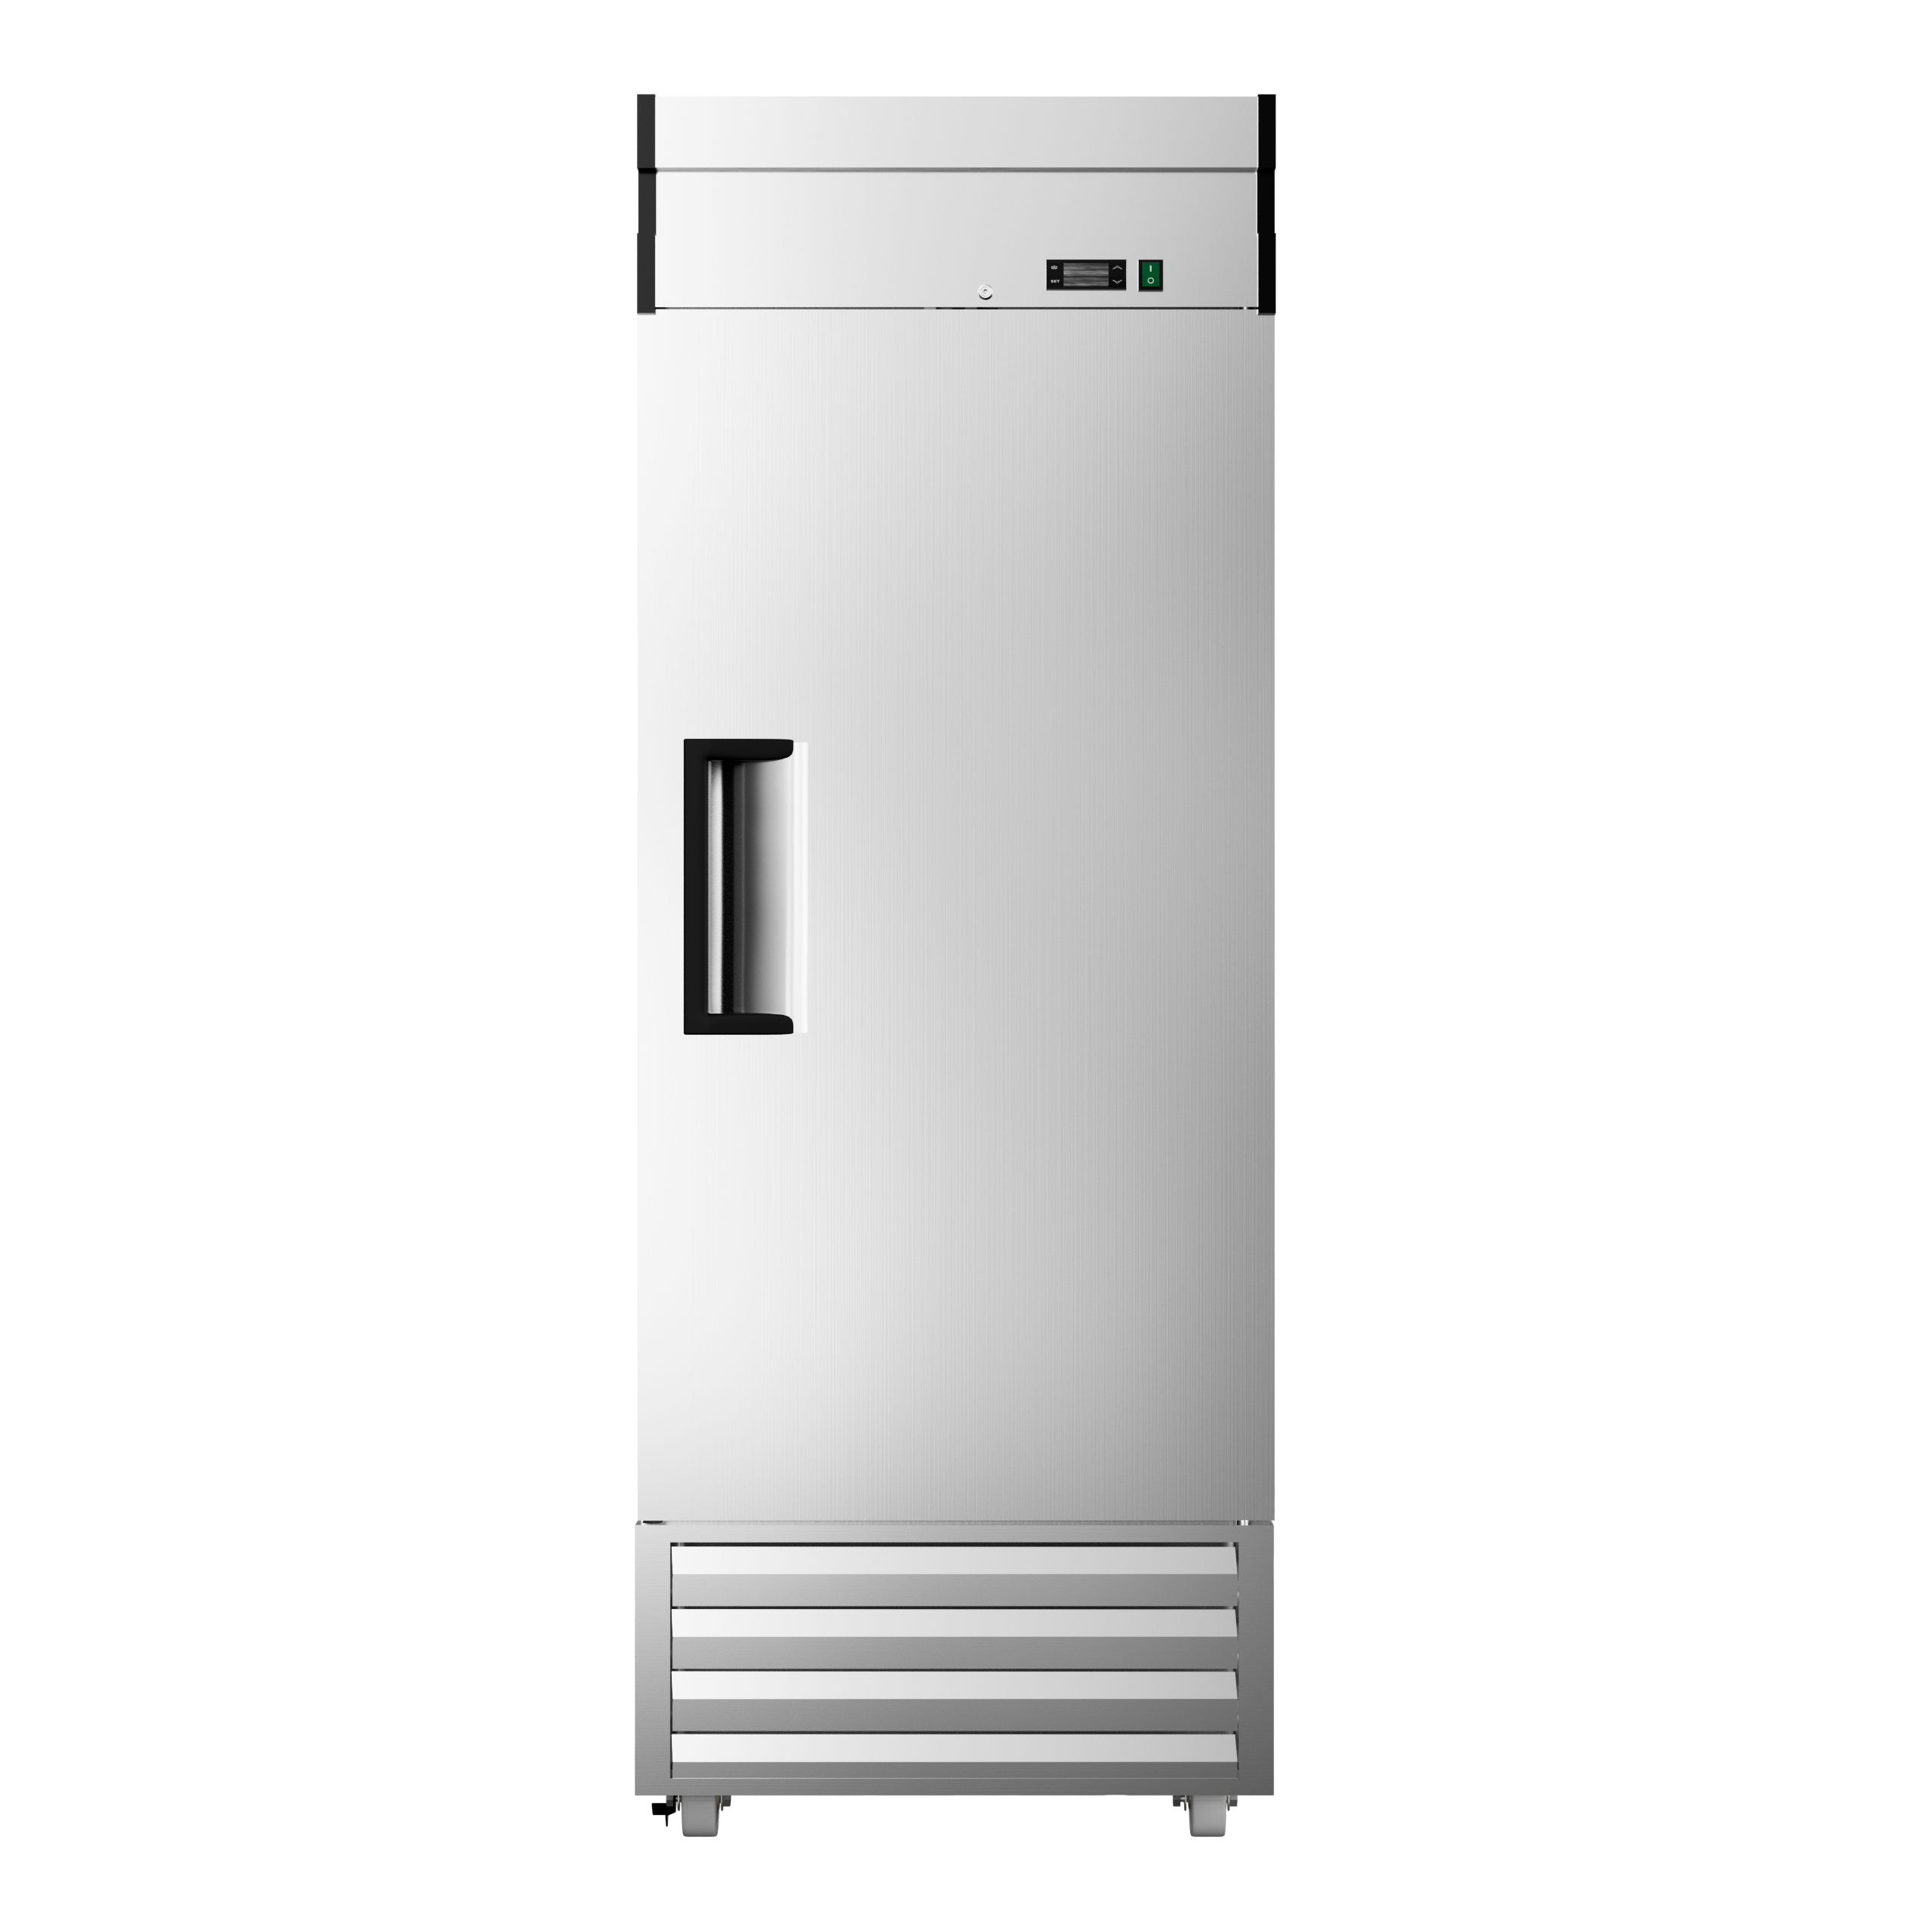 KICHKING 27" Commercial Reach-In Refrigerator- Glass Door Stainless Steel Merchandiser